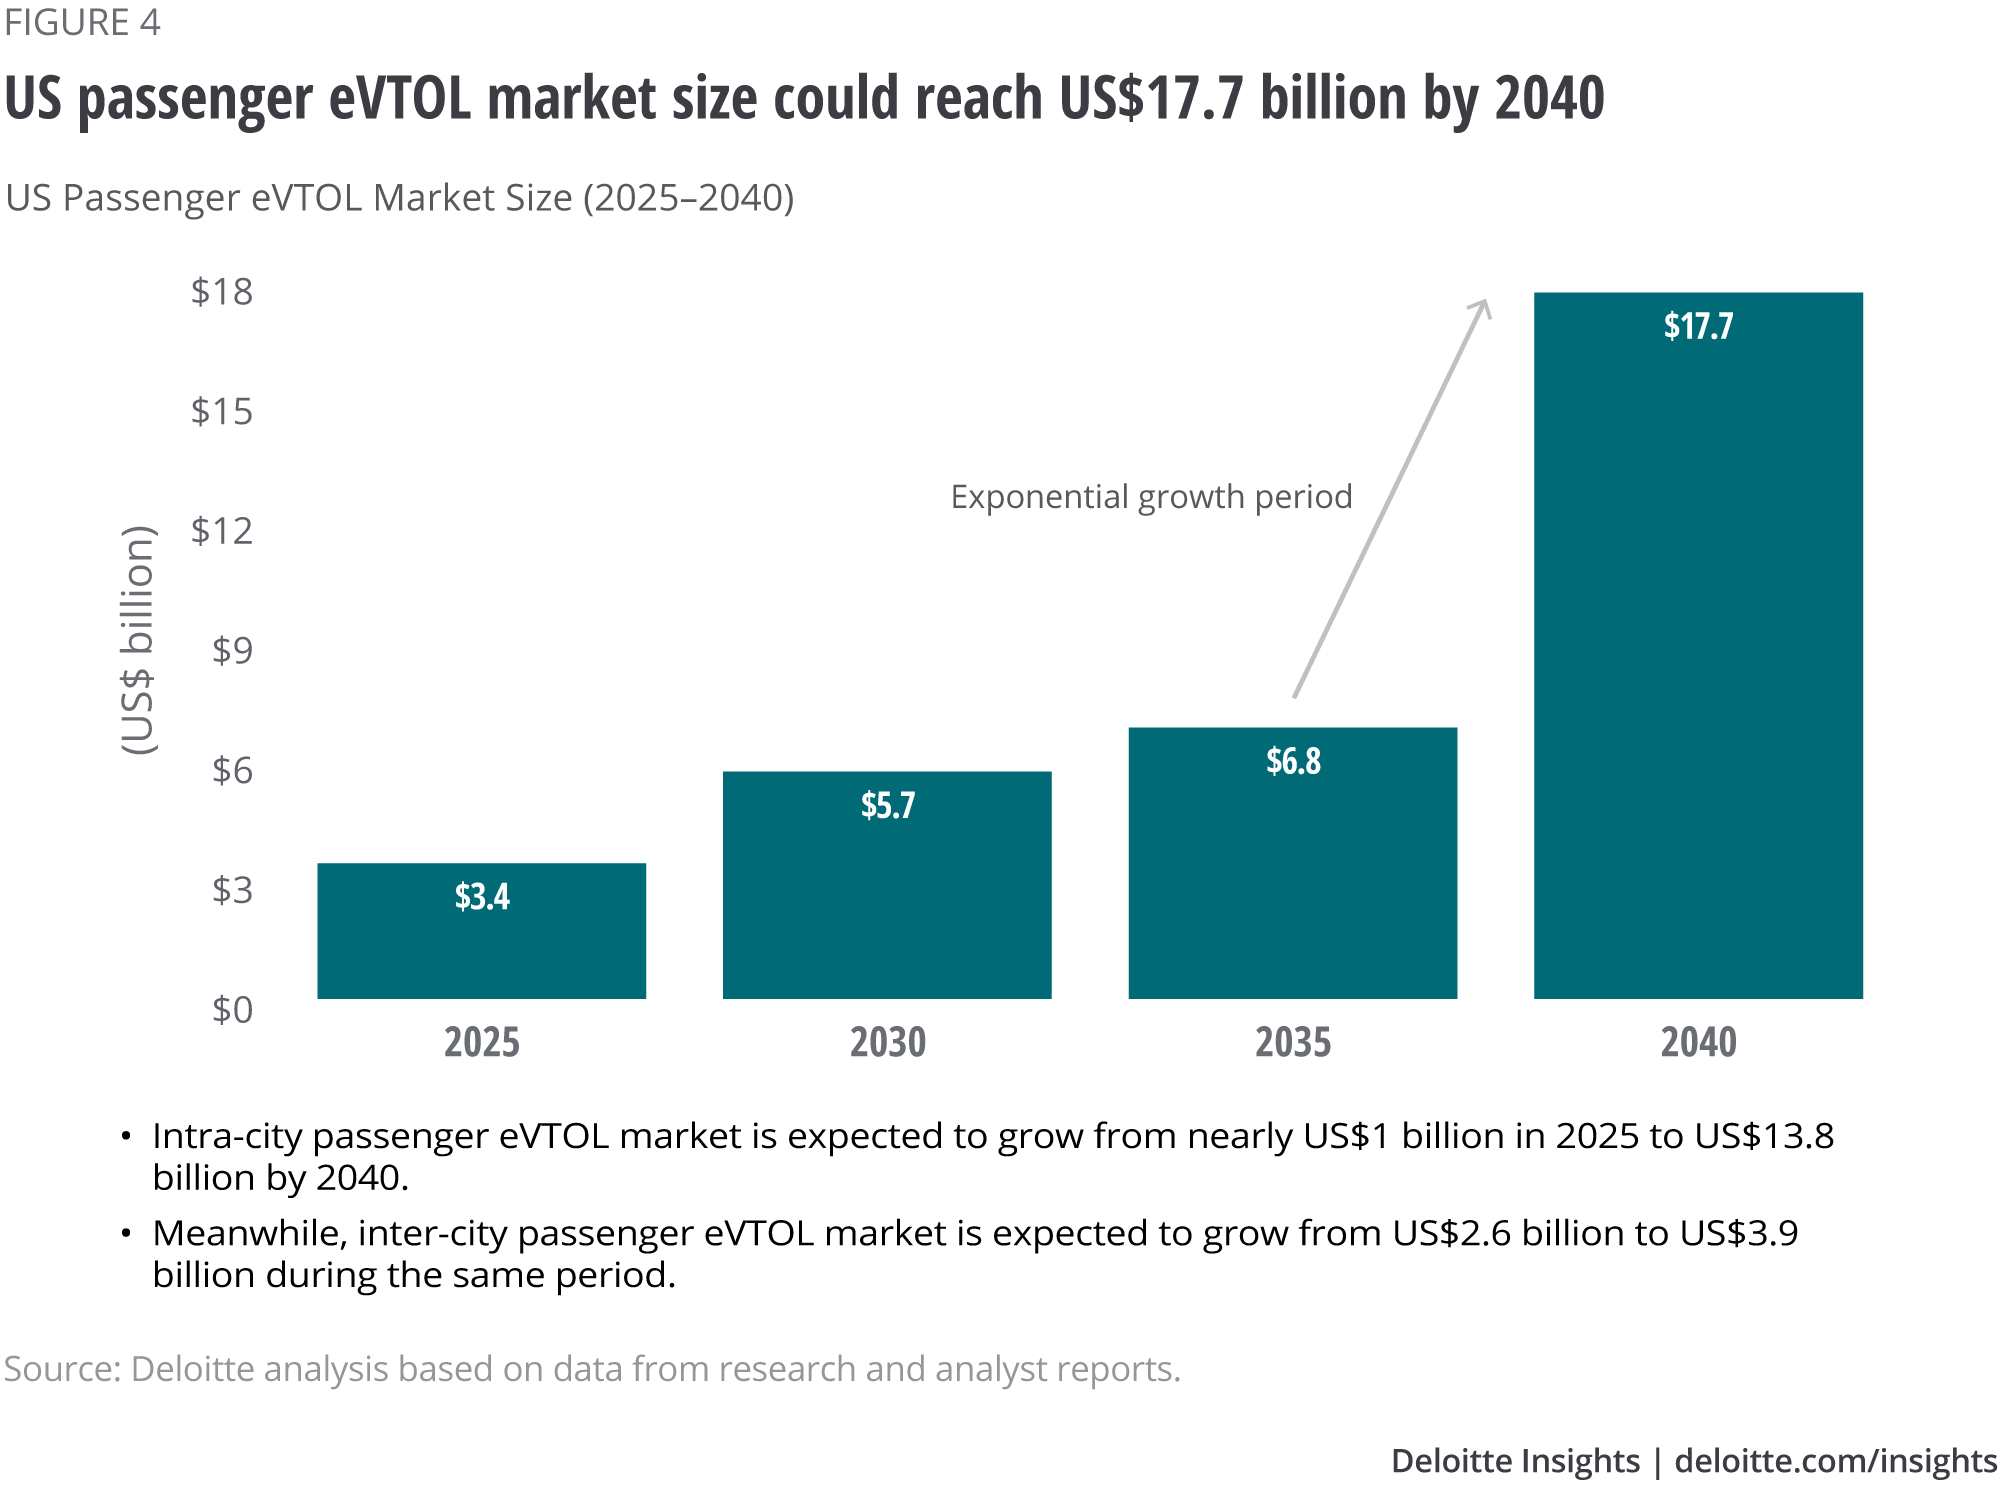 US passenger eVTOL market size could reach US$17.7 billion by 2040